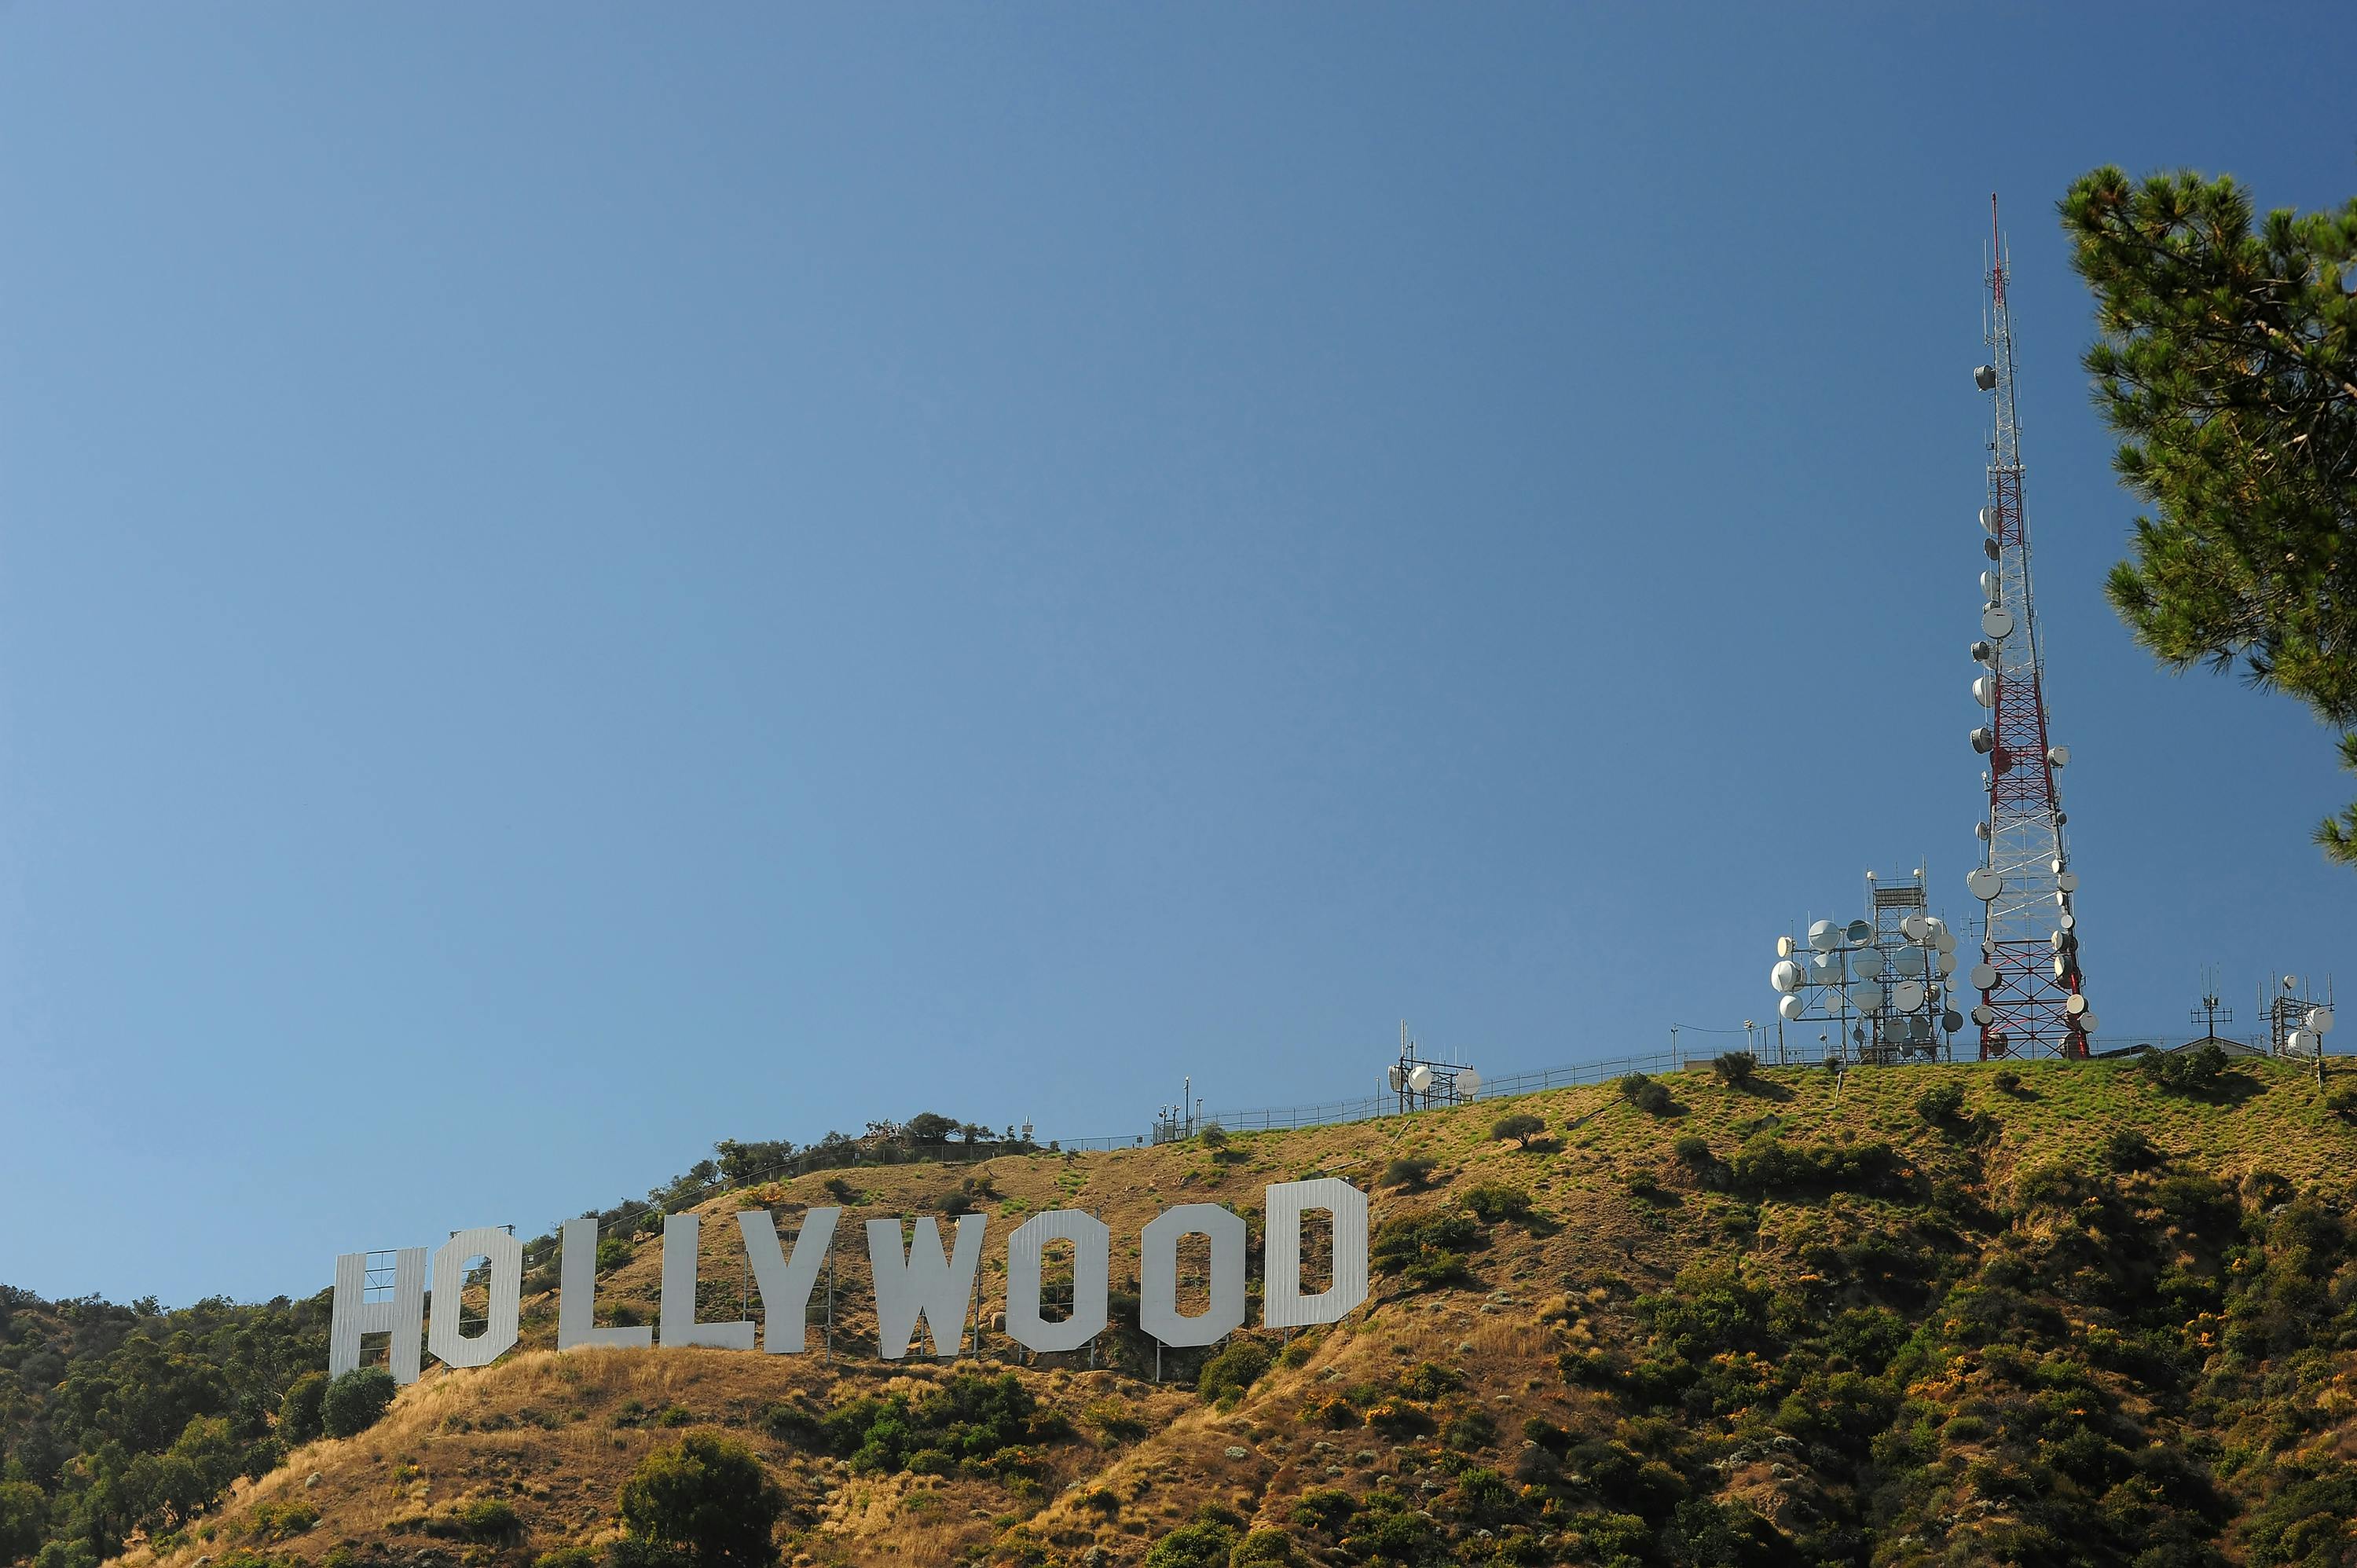 Los Angeles Hollywood kyltti